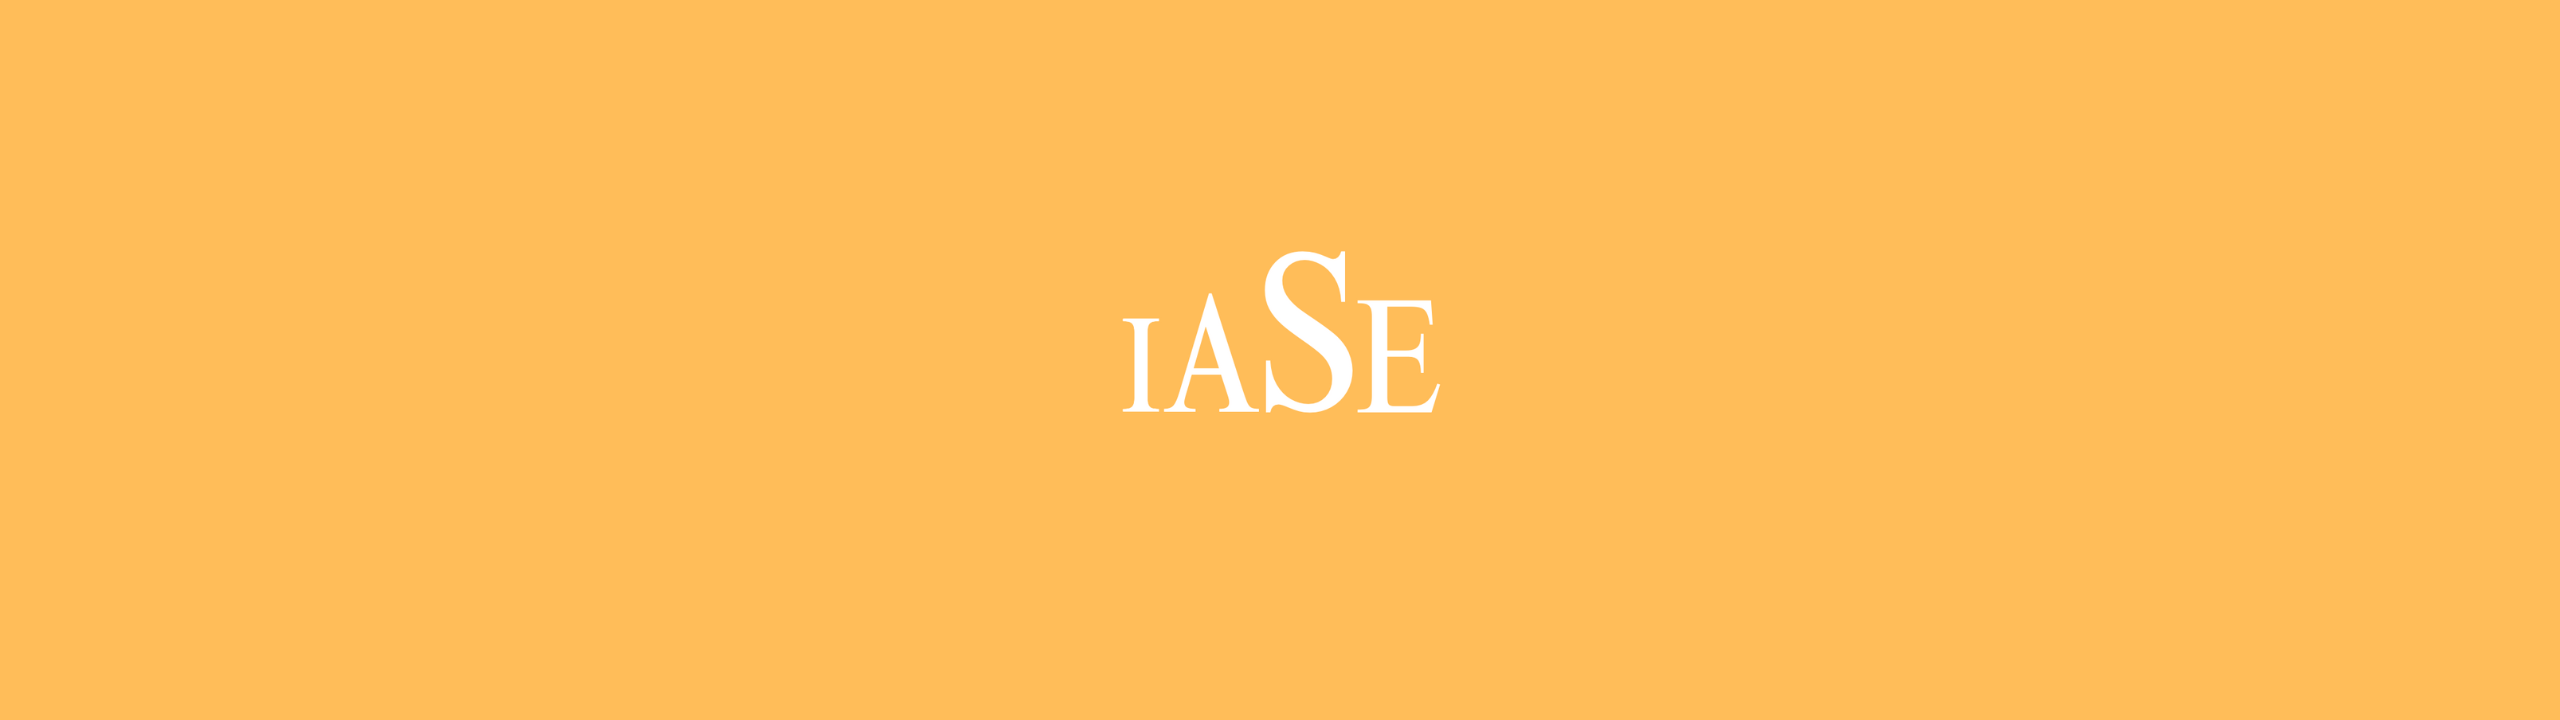 iase-banner